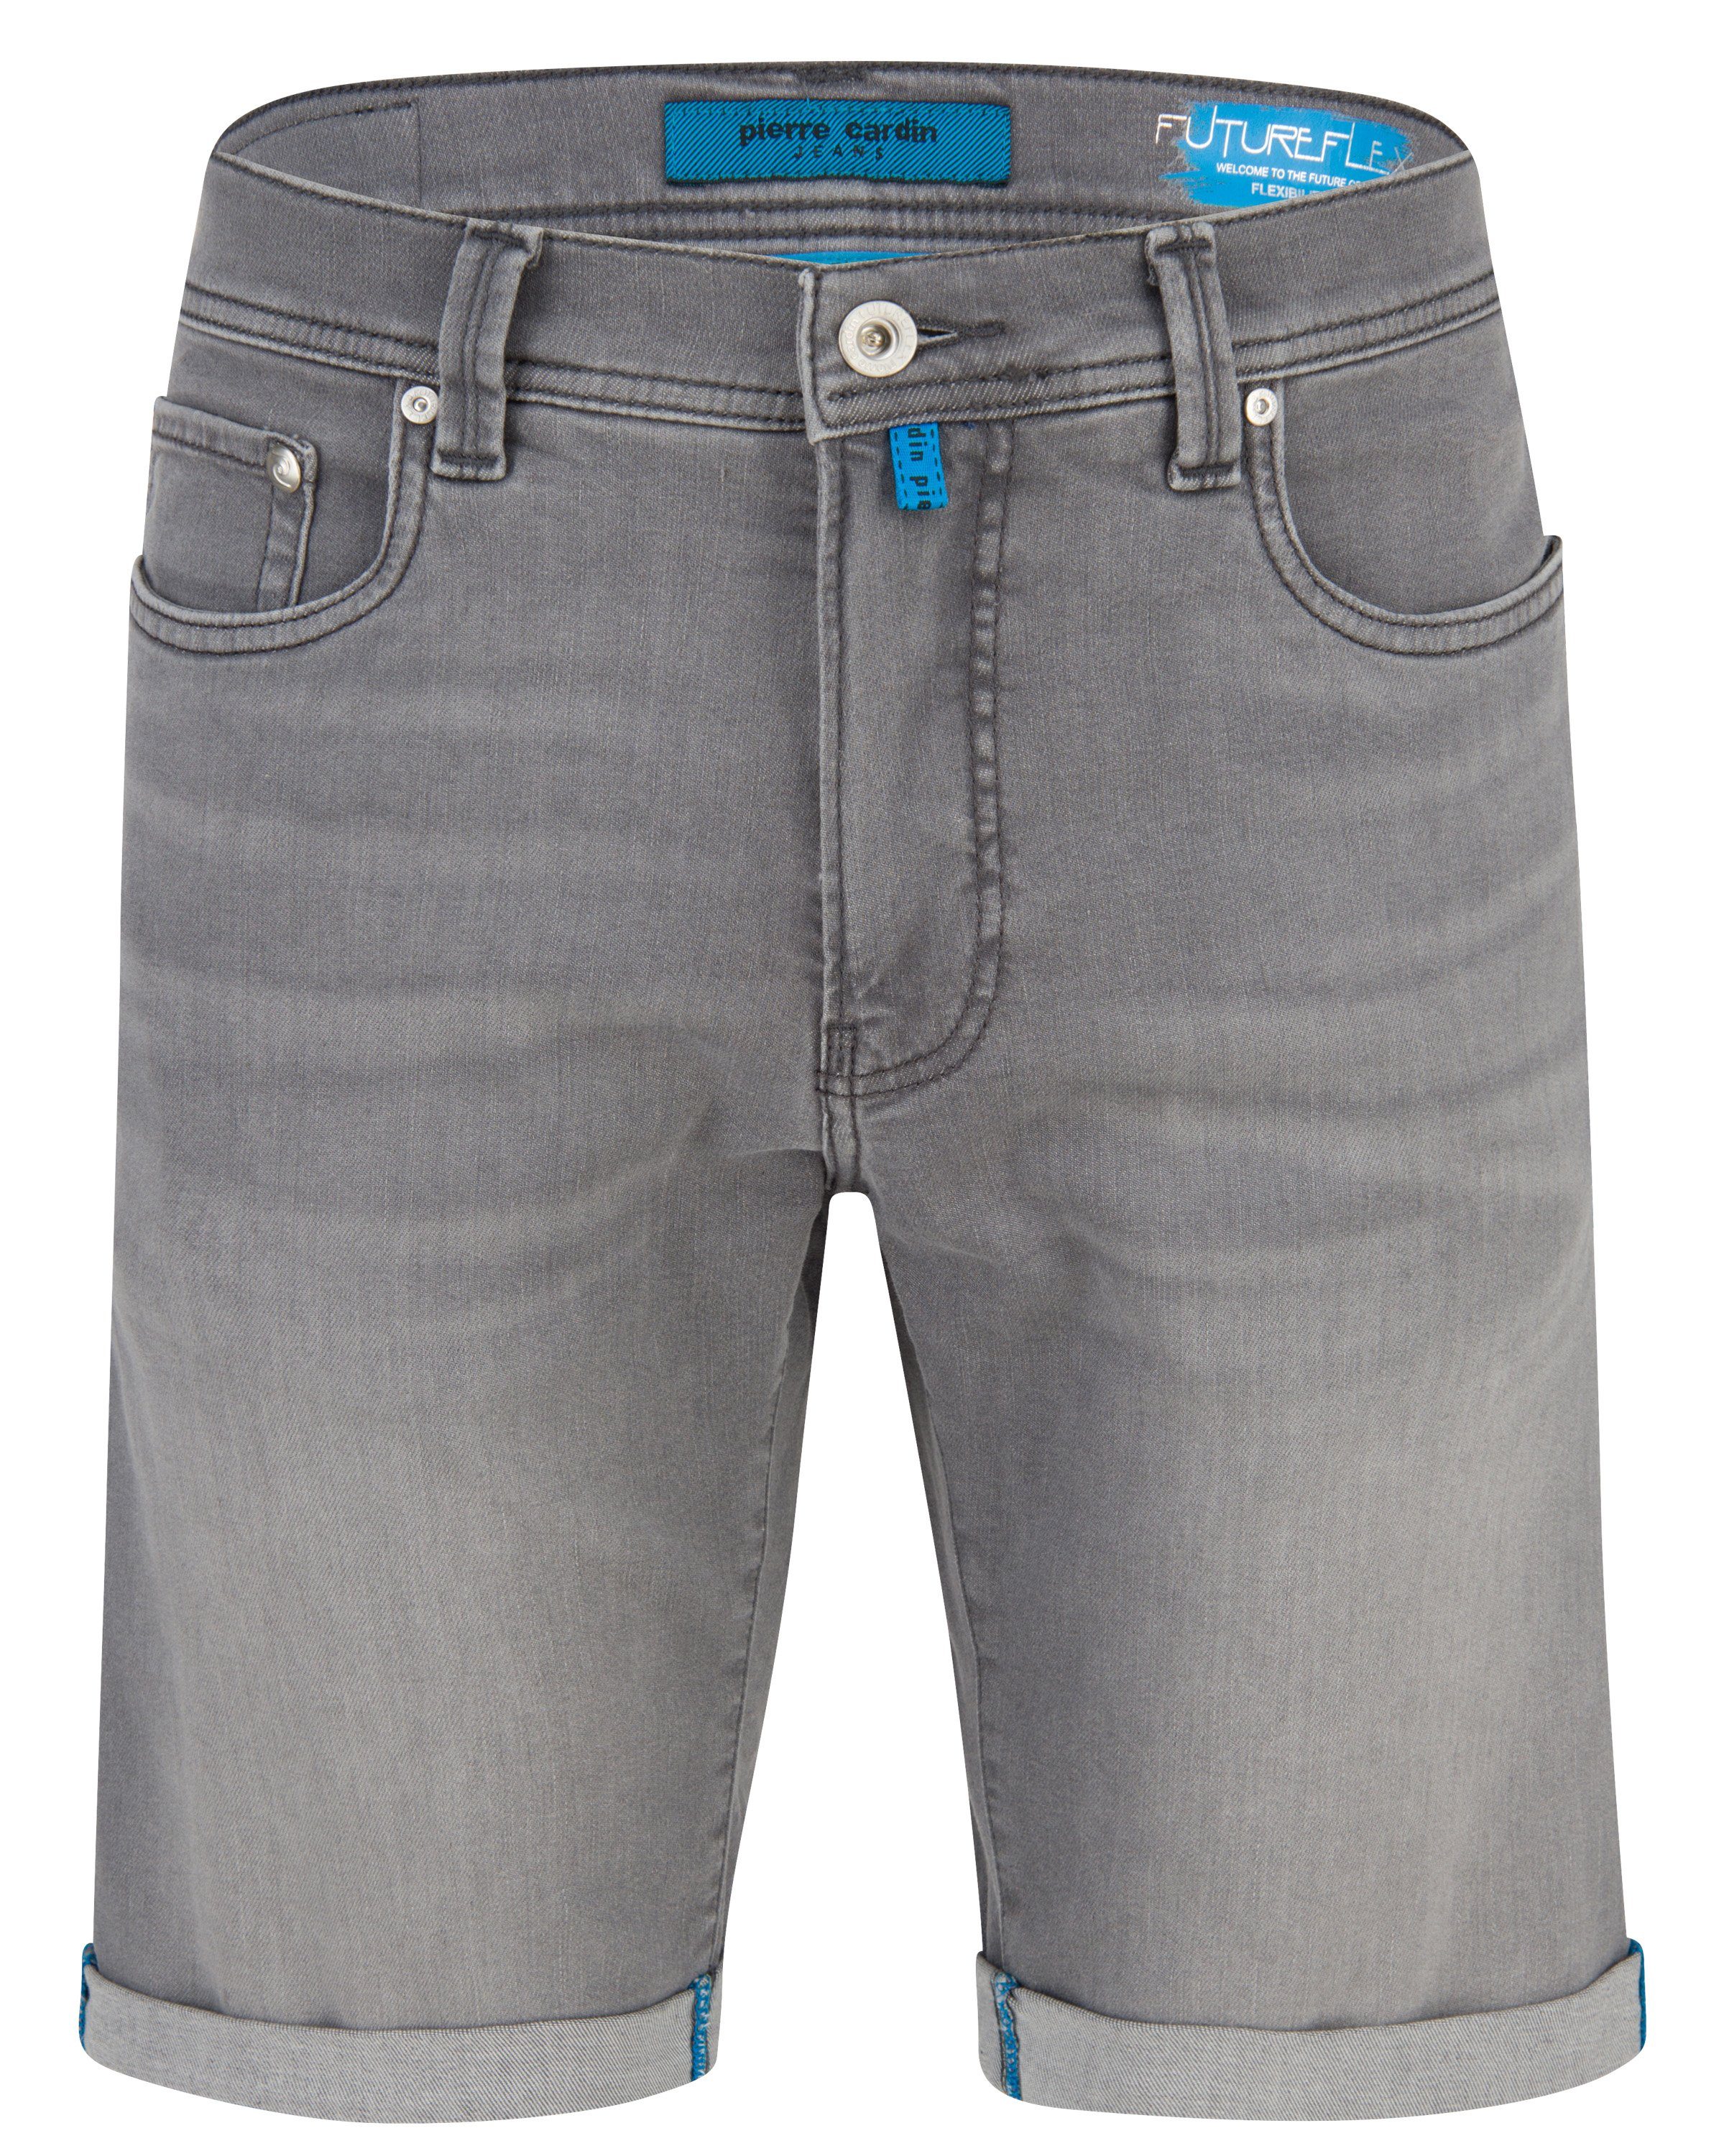 Pierre Cardin 5-Pocket-Jeans PIERRE CARDIN FUTUREFLEX SHORTS anthrazit 3452 8881.83